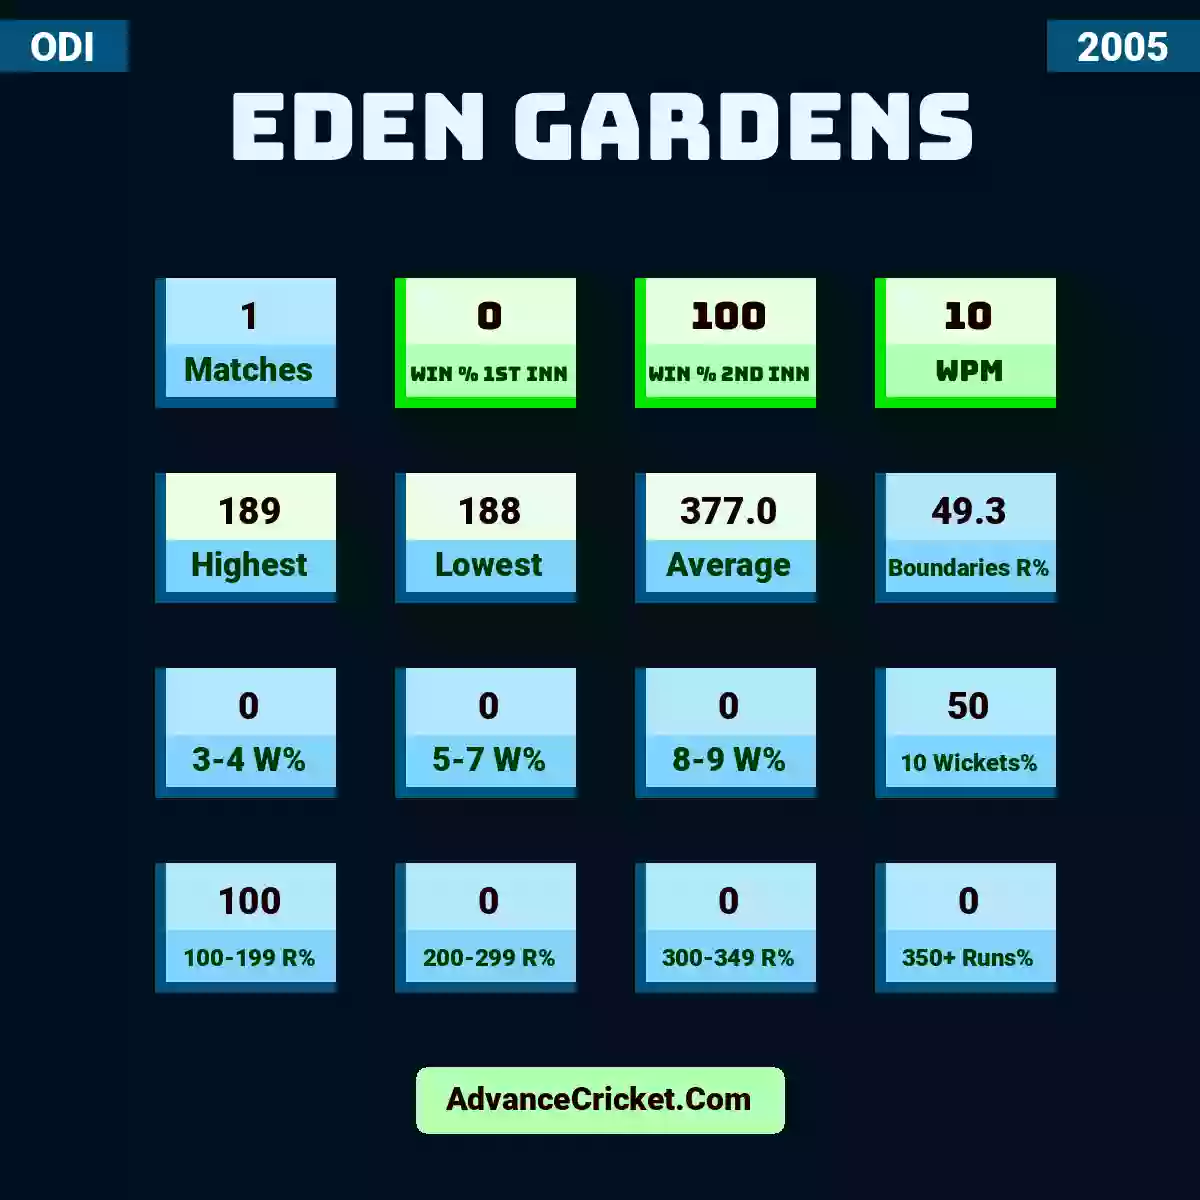 Image showing Eden Gardens with Matches: 1, Win % 1st Inn: 0, Win % 2nd Inn: 100, WPM: 10, Highest: 189, Lowest: 188, Average: 377.0, Boundaries R%: 49.3, 3-4 W%: 0, 5-7 W%: 0, 8-9 W%: 0, 10 Wickets%: 50, 100-199 R%: 100, 200-299 R%: 0, 300-349 R%: 0, 350+ Runs%: 0.